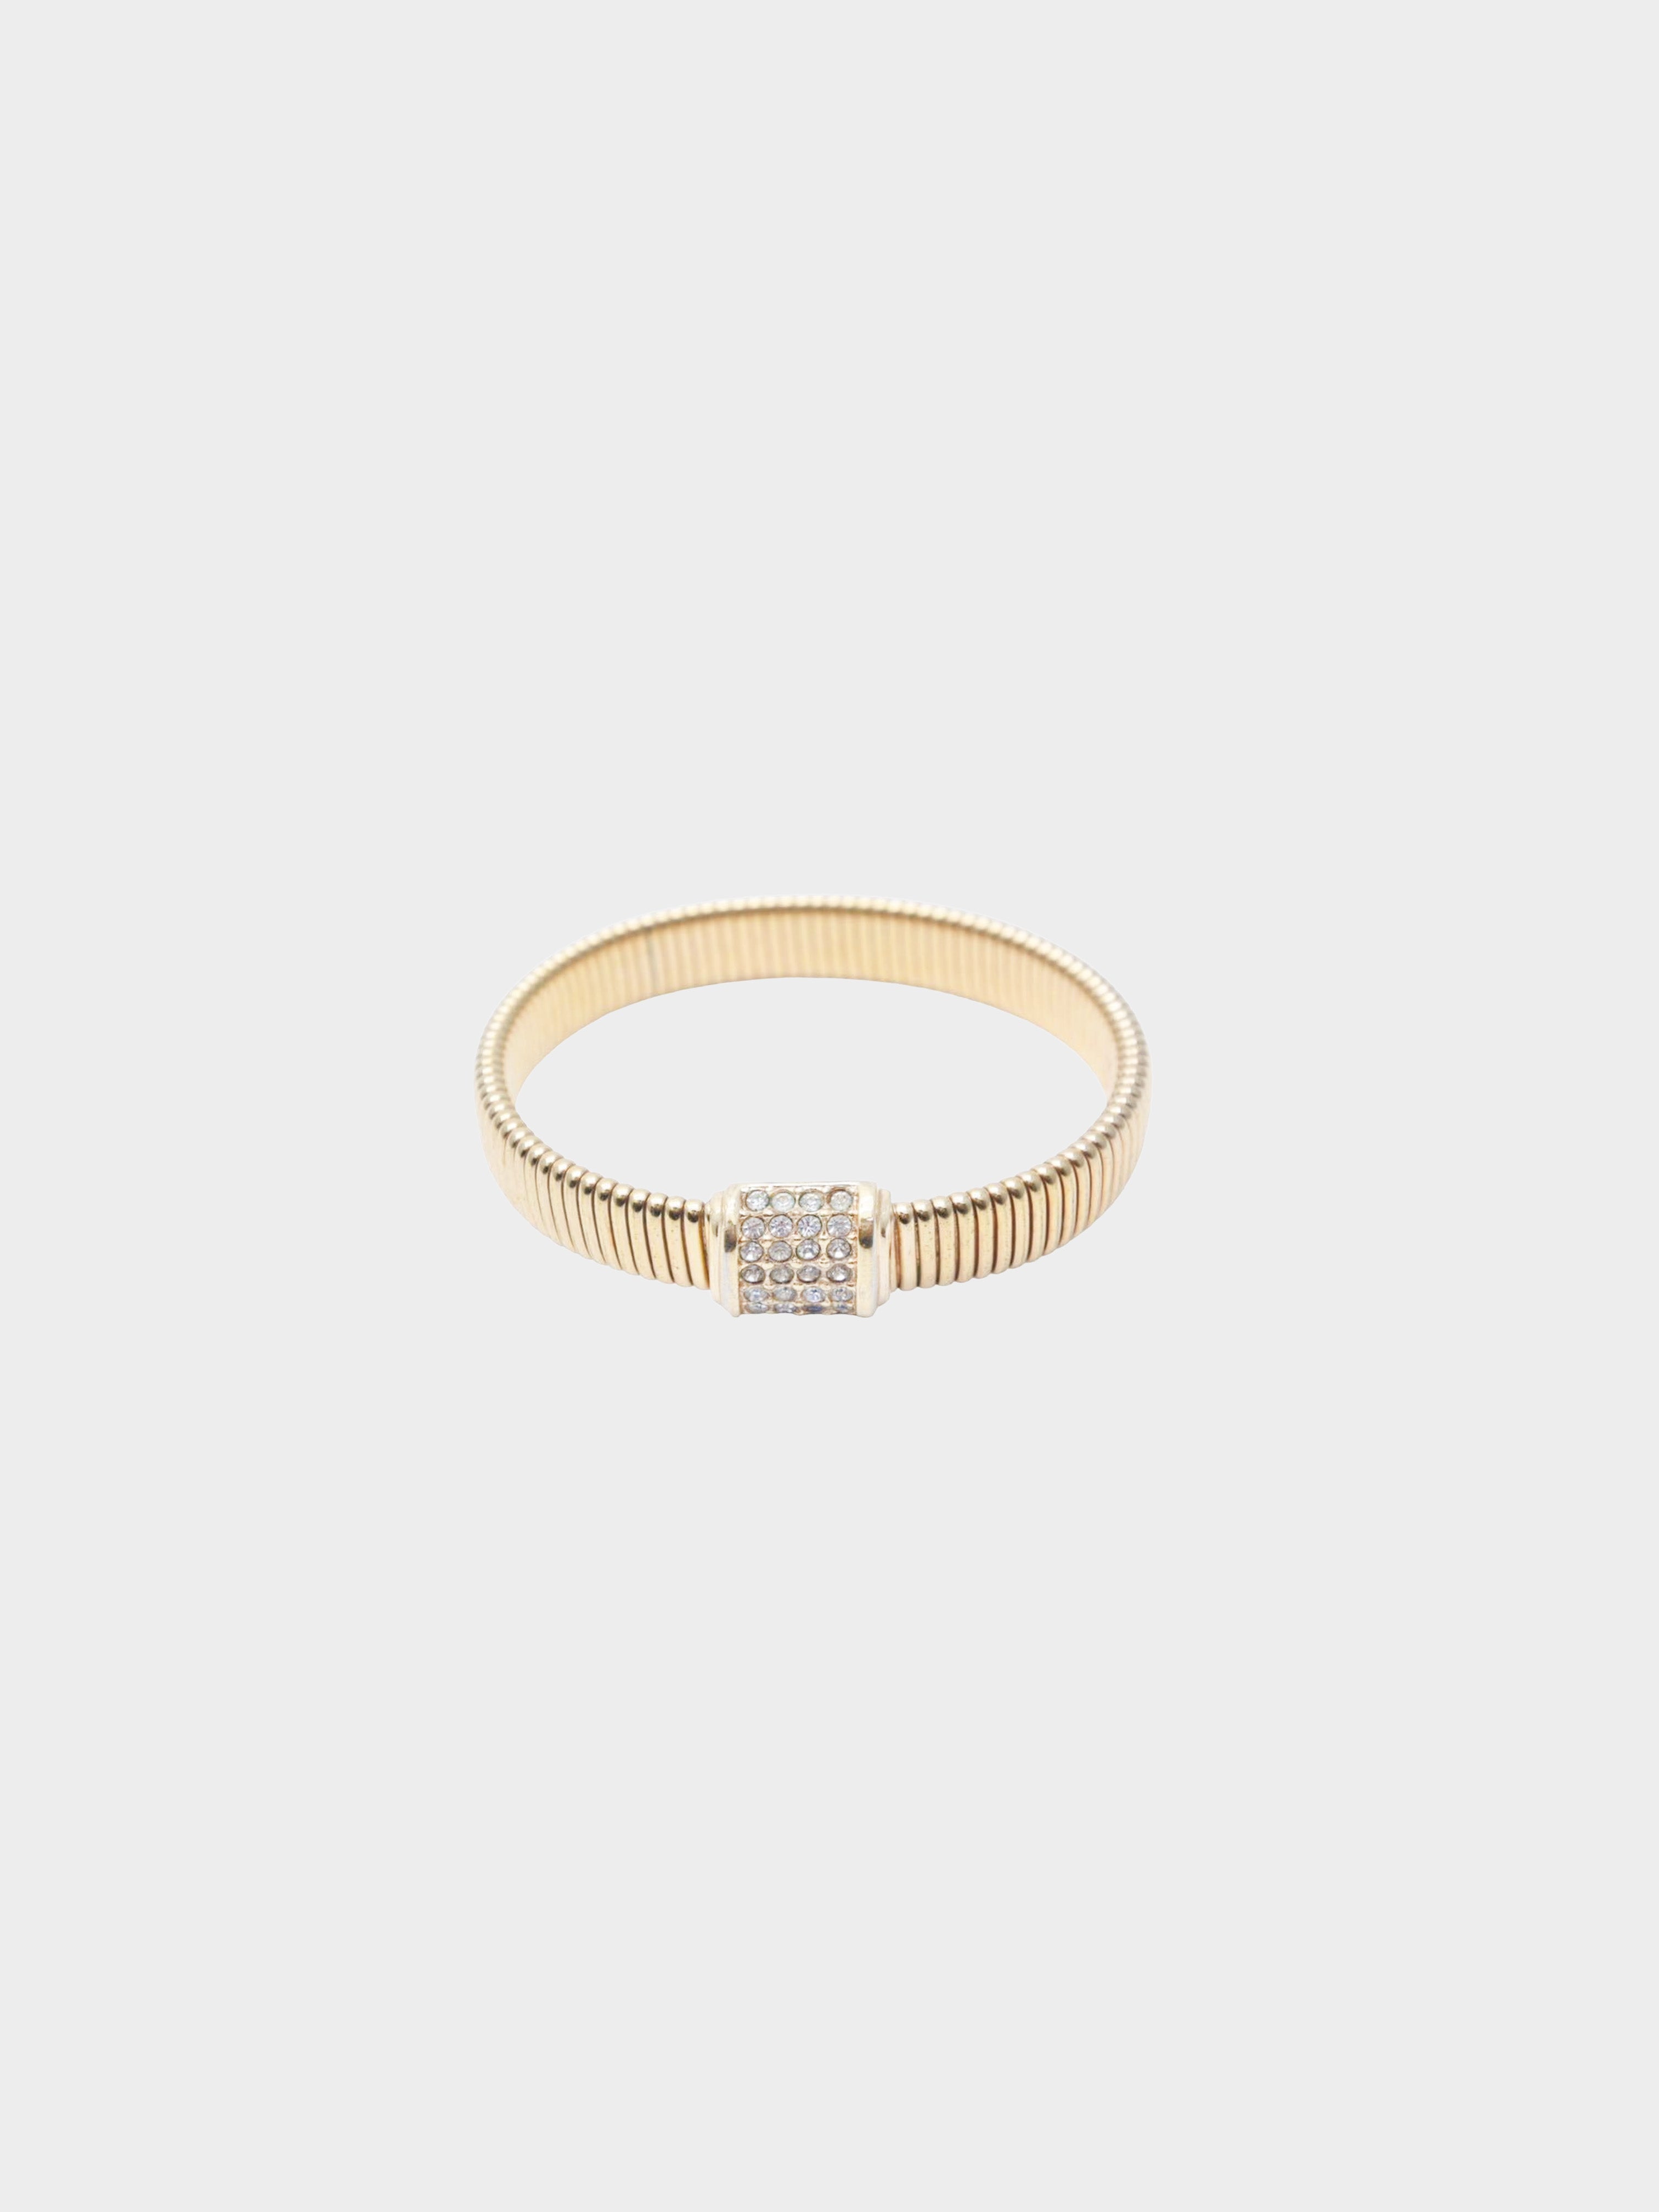 Christian Dior 1980s Gold Rhinestone Bracelet